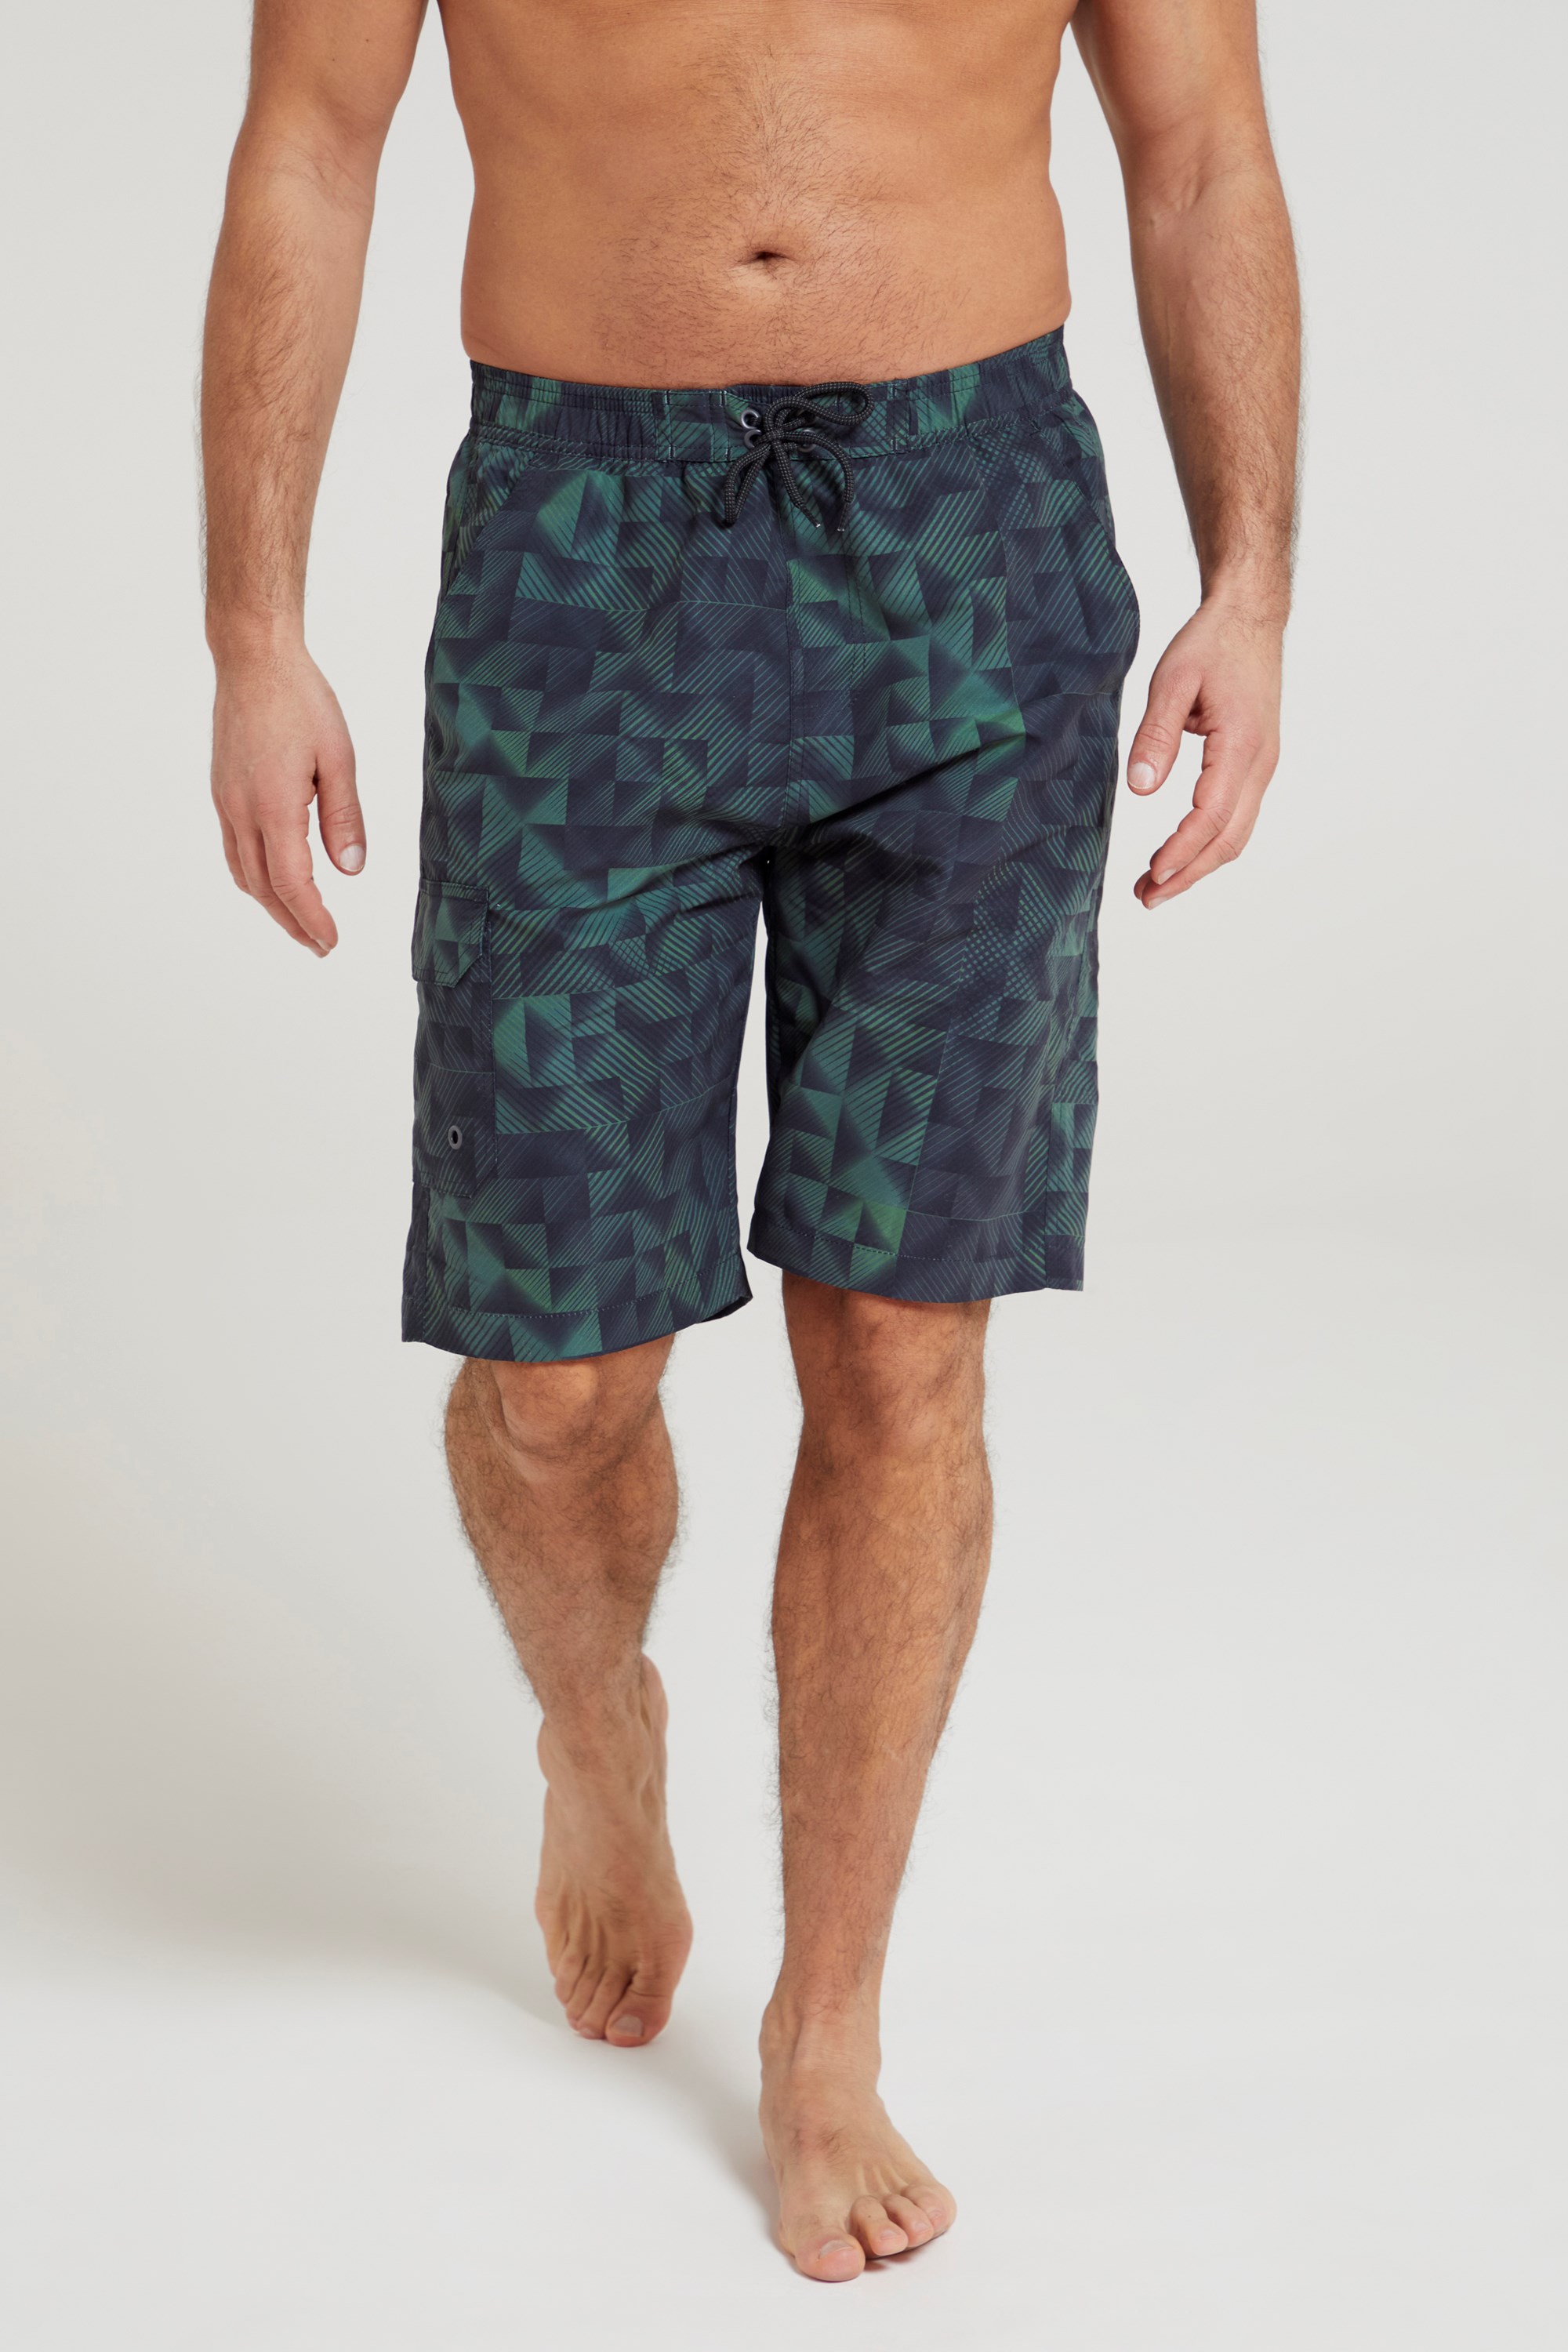 Ocean Printed Mens Boardshorts - Green